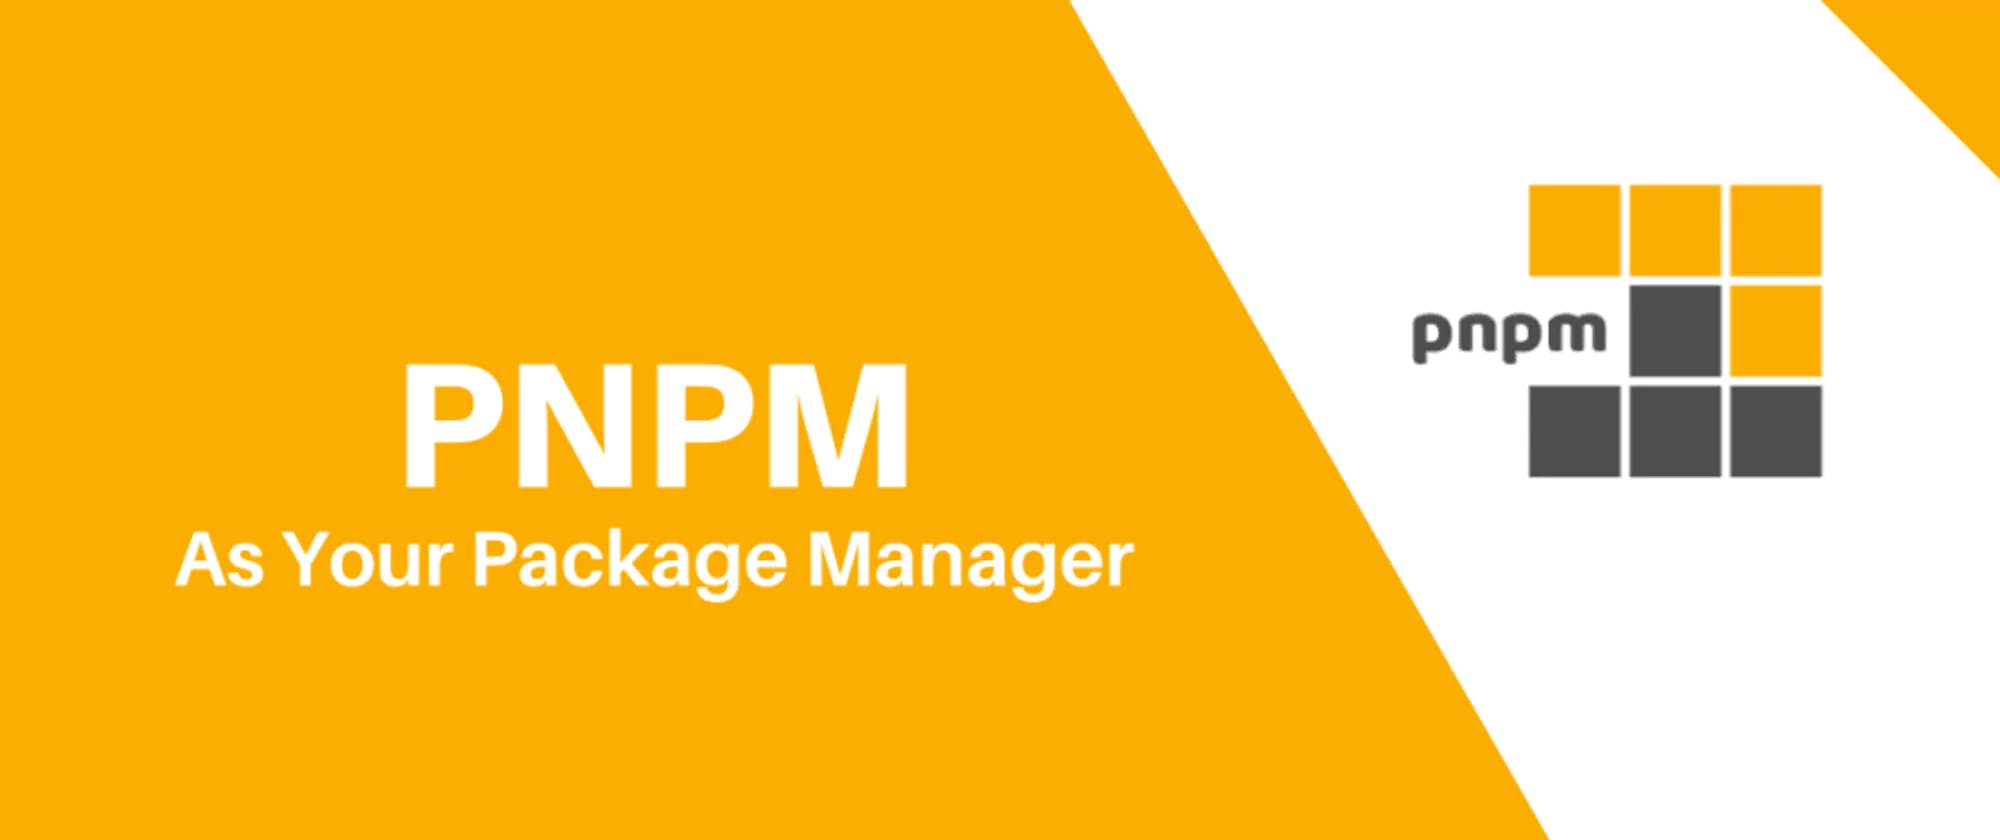 PNPM has both Yarn & NPM Beat cover image